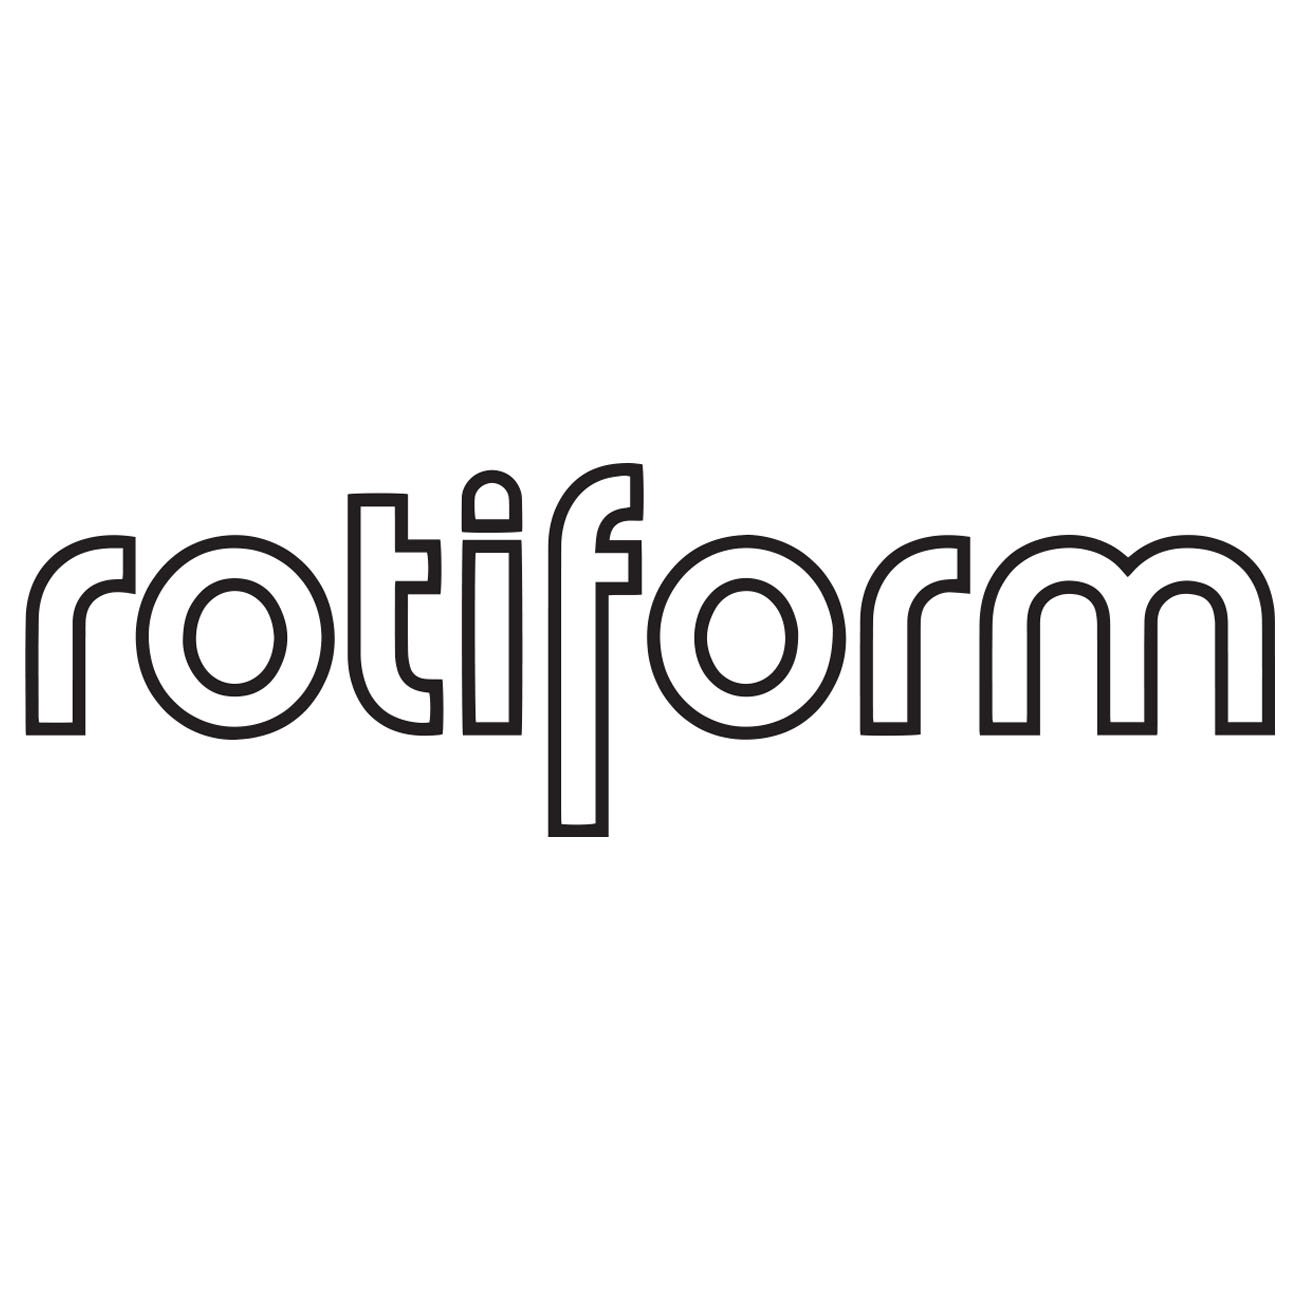 rotiform logo 3